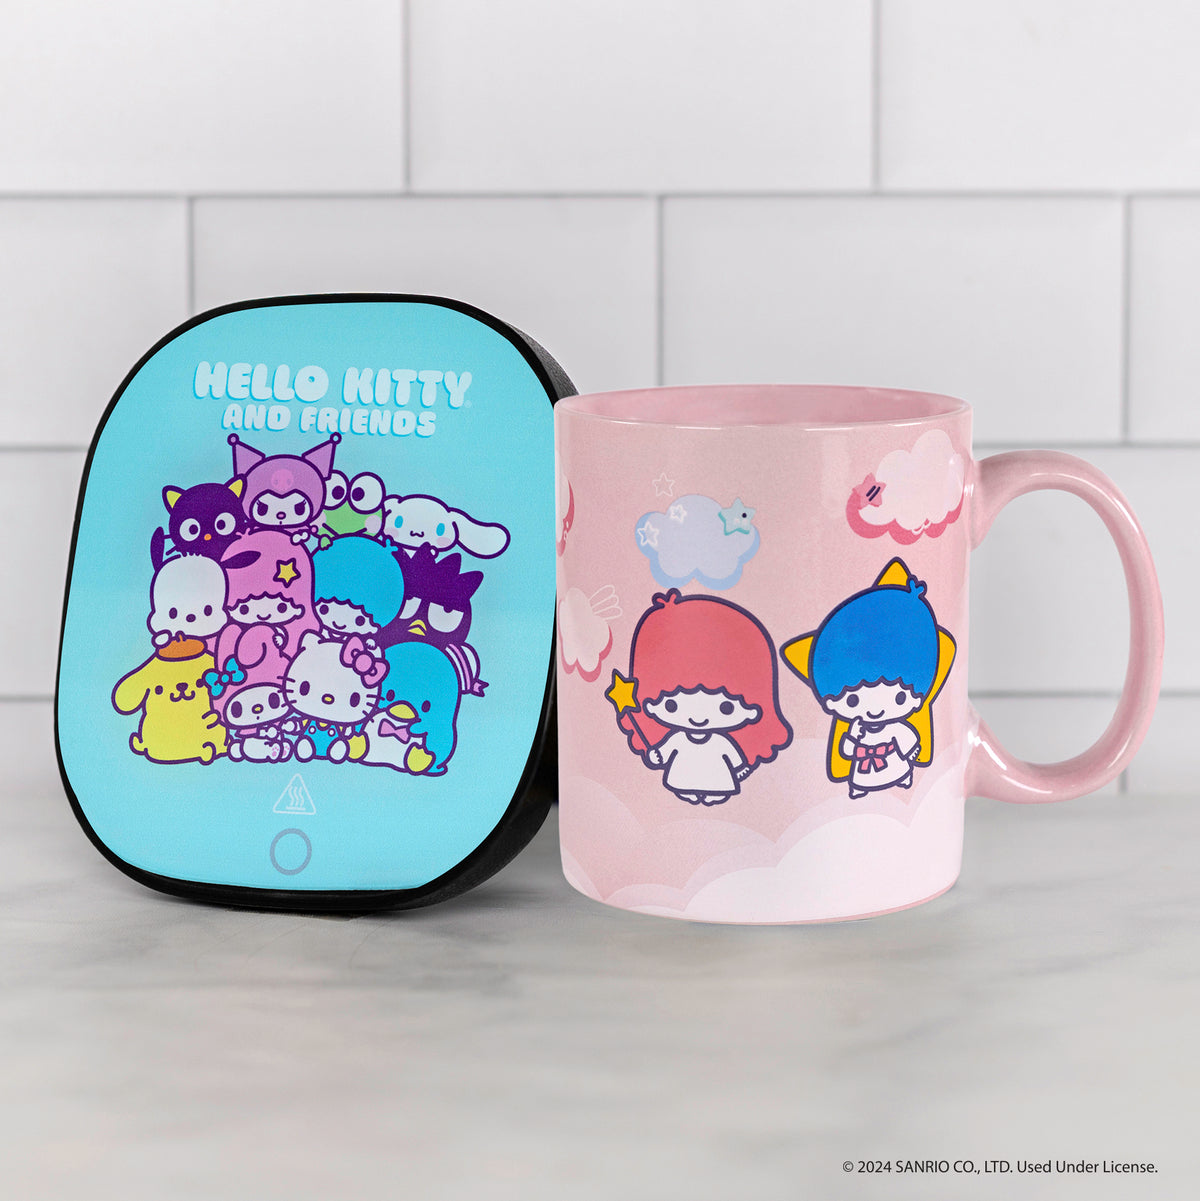 Hello Kitty and Friends Little Twin Stars Mug Warmer with Mug